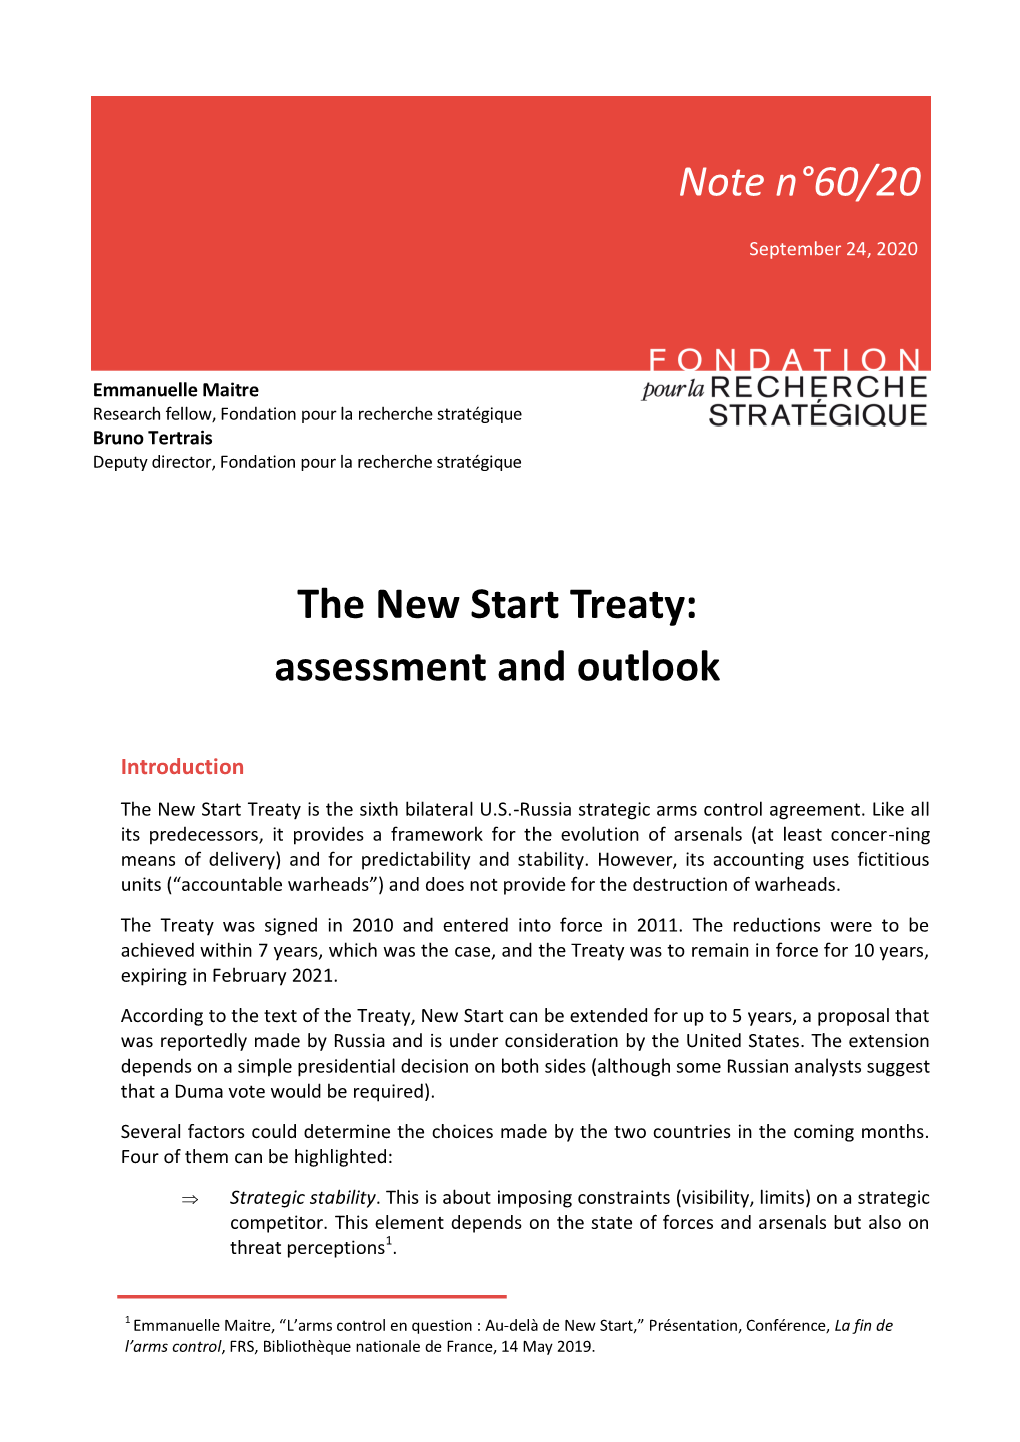 Note N°60/20 the New Start Treaty